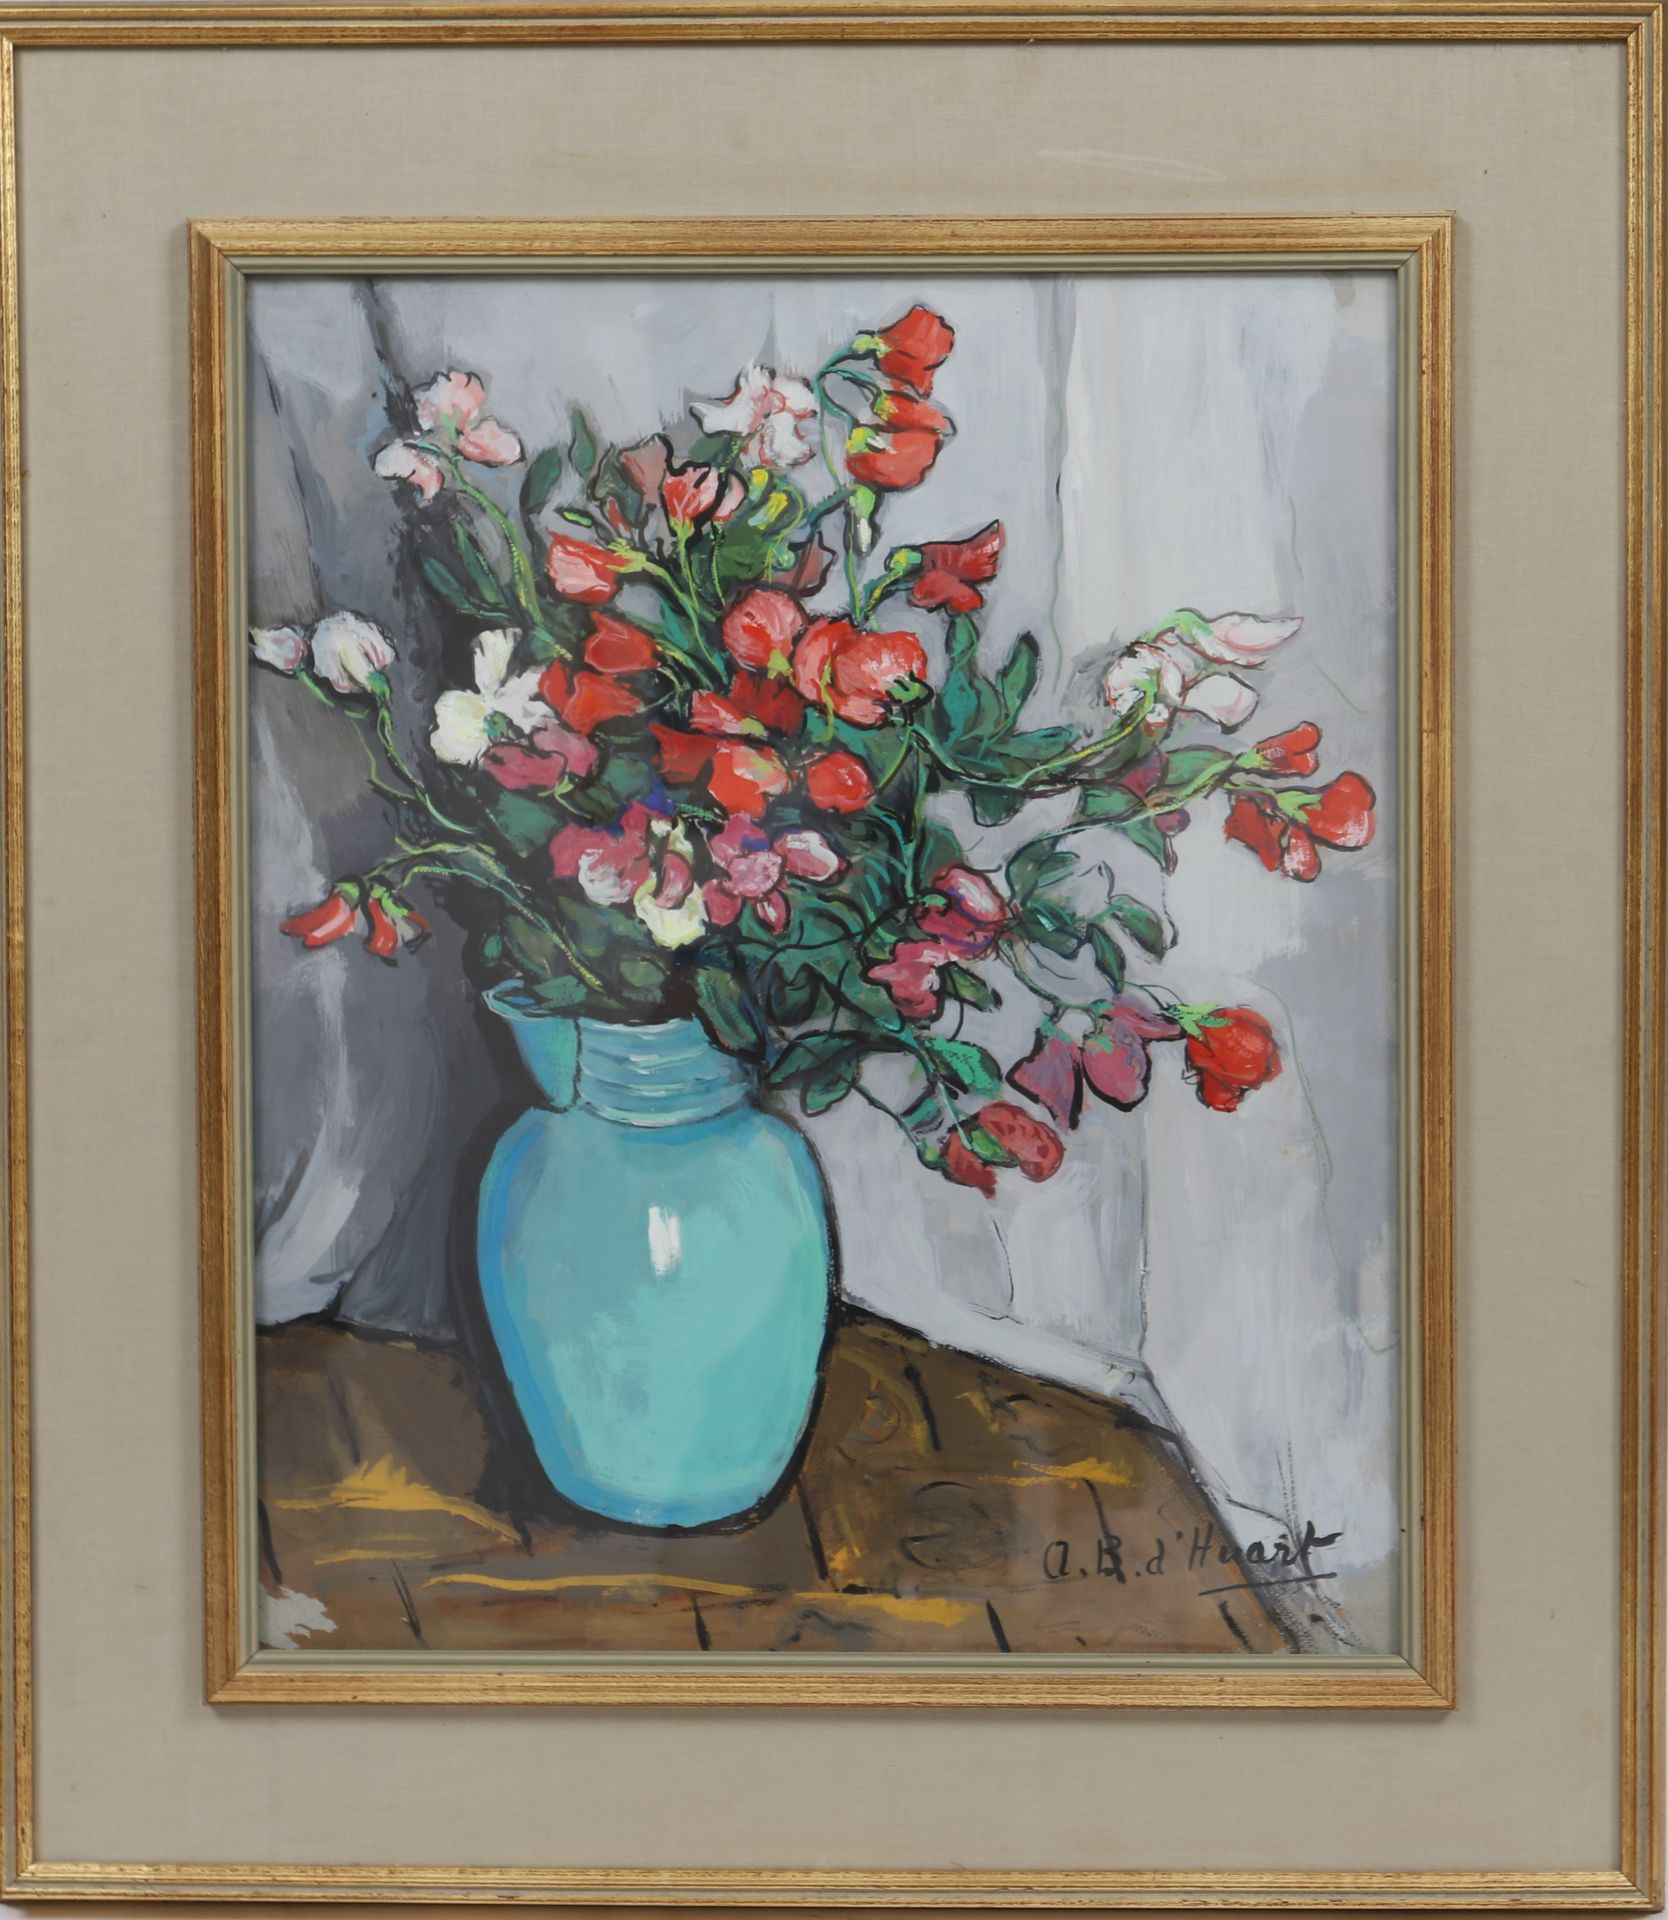 Null Adrienne D'Huart (1892-1992) 

Artiste peintre luxembourgeoise

Huile sur p&hellip;